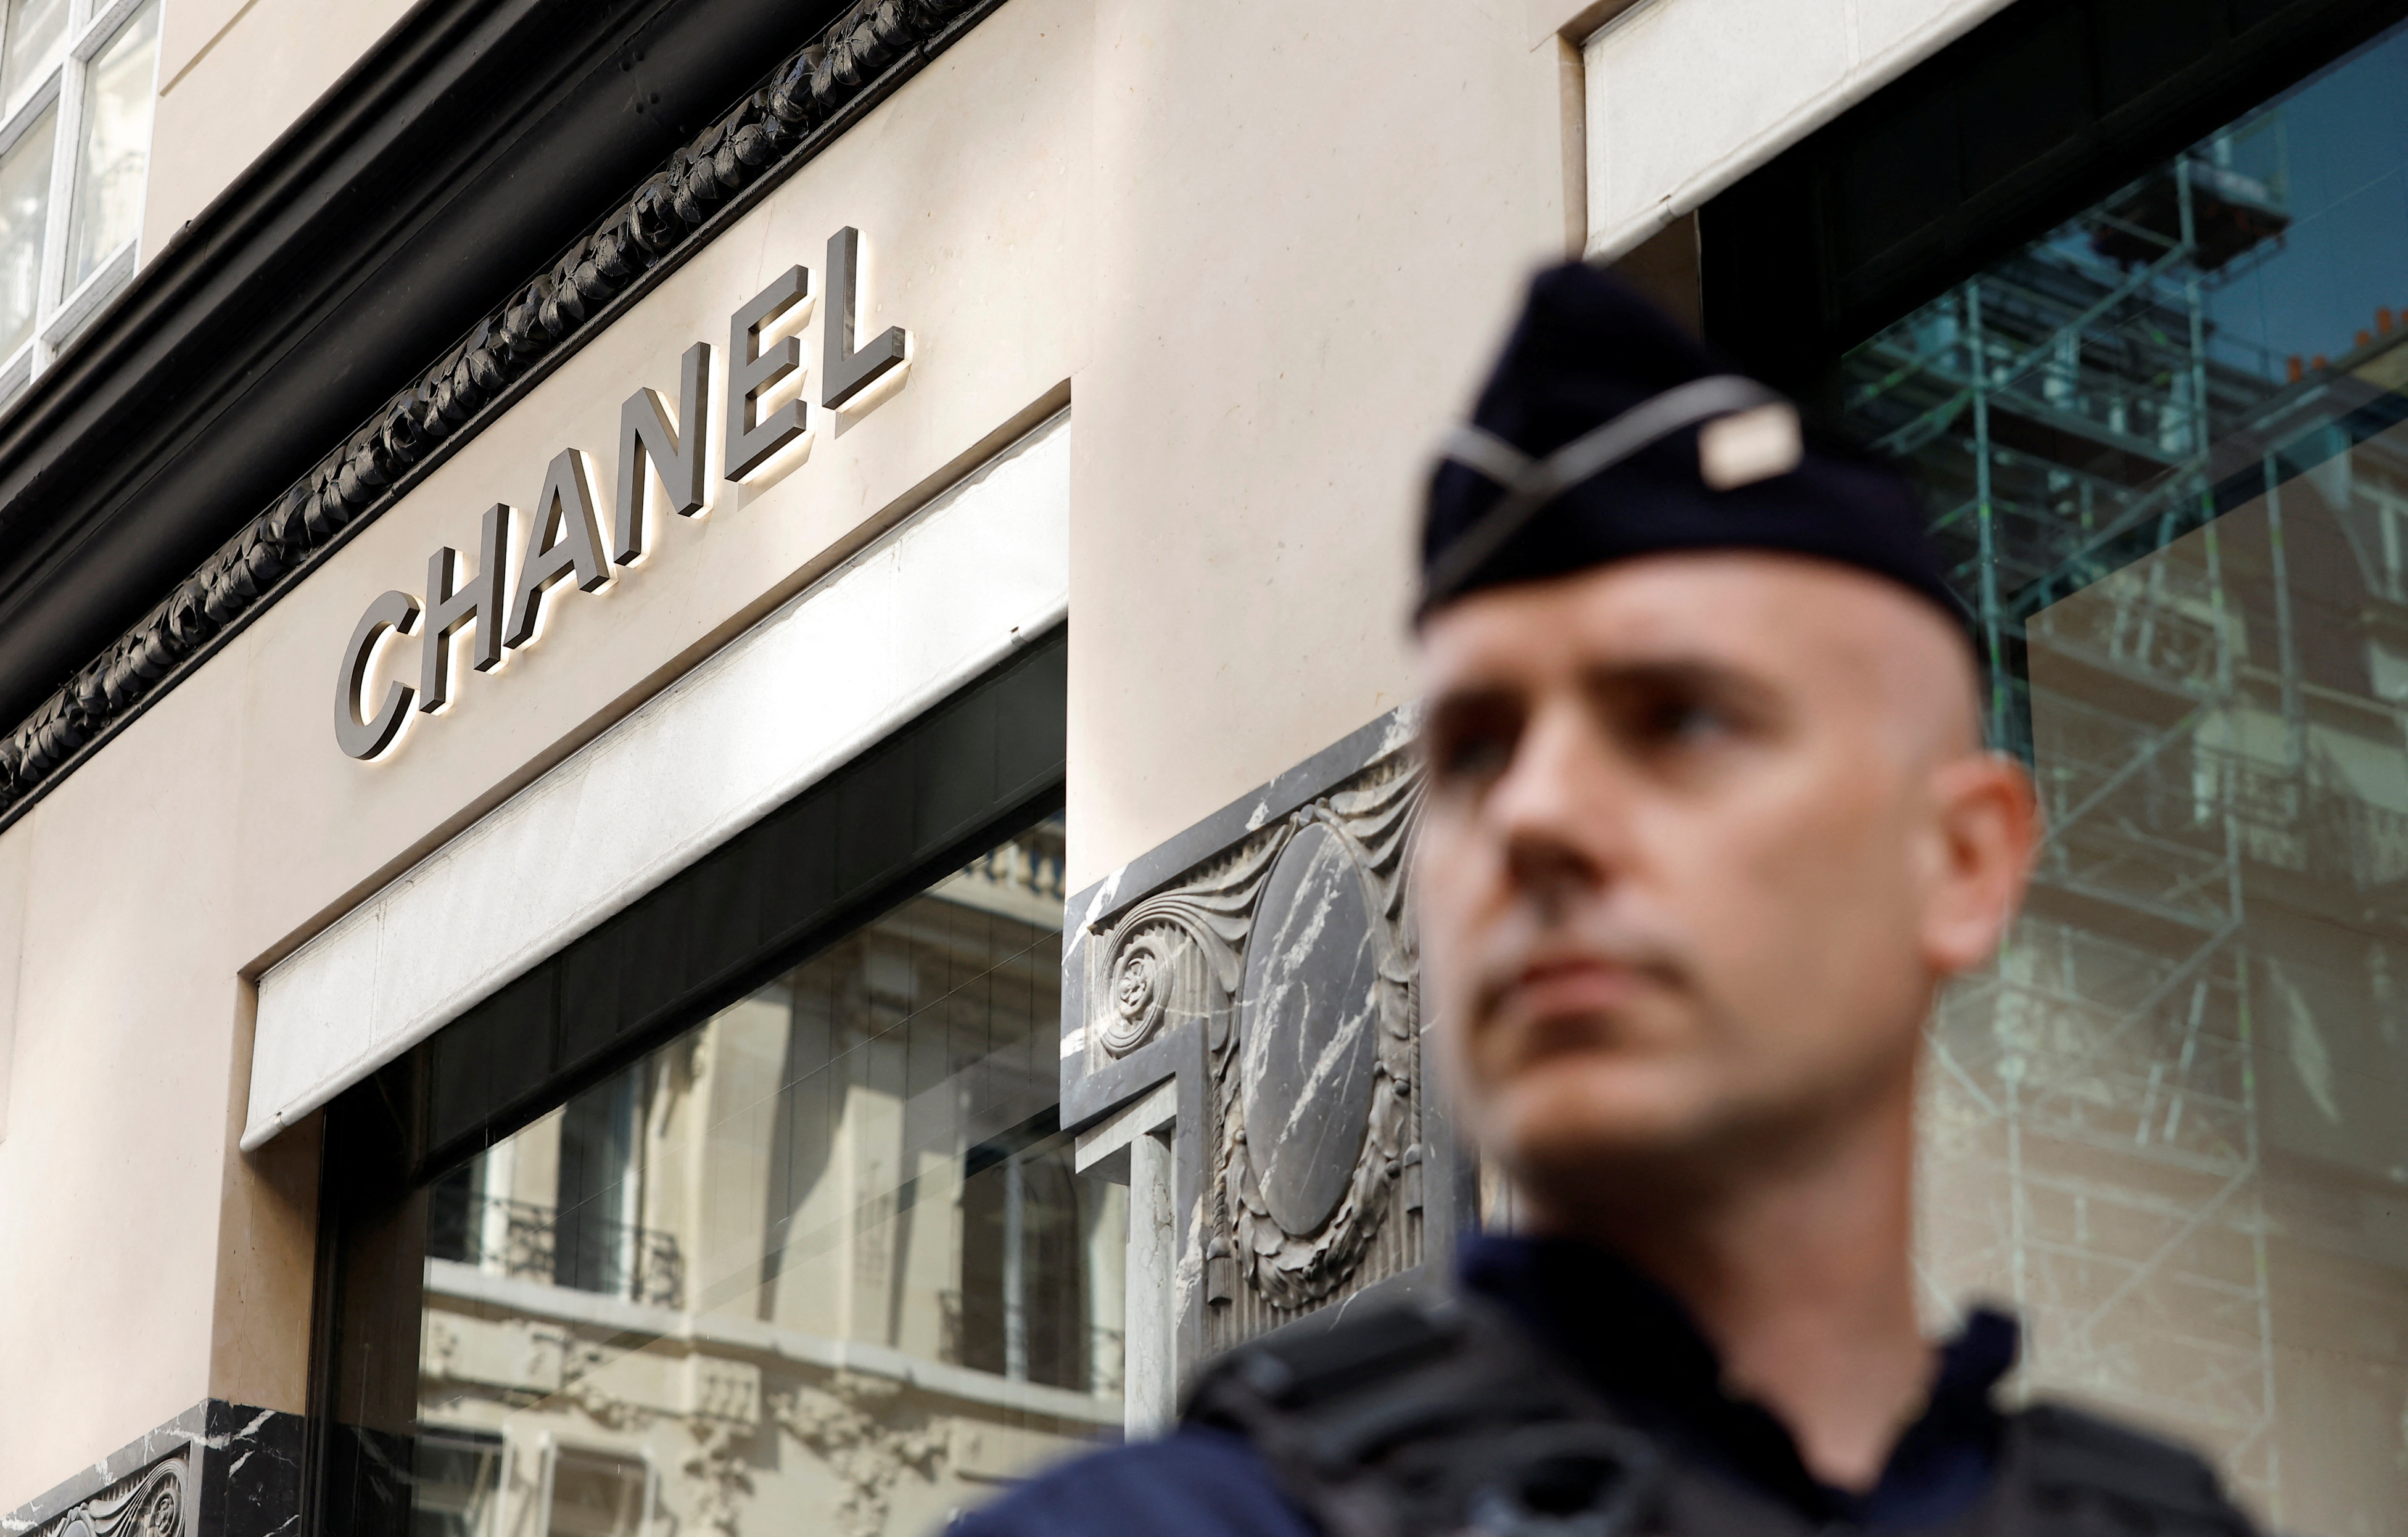 Armed robbers strike Chanel jewellery store in Paris and flee on motorbikes  | Reuters